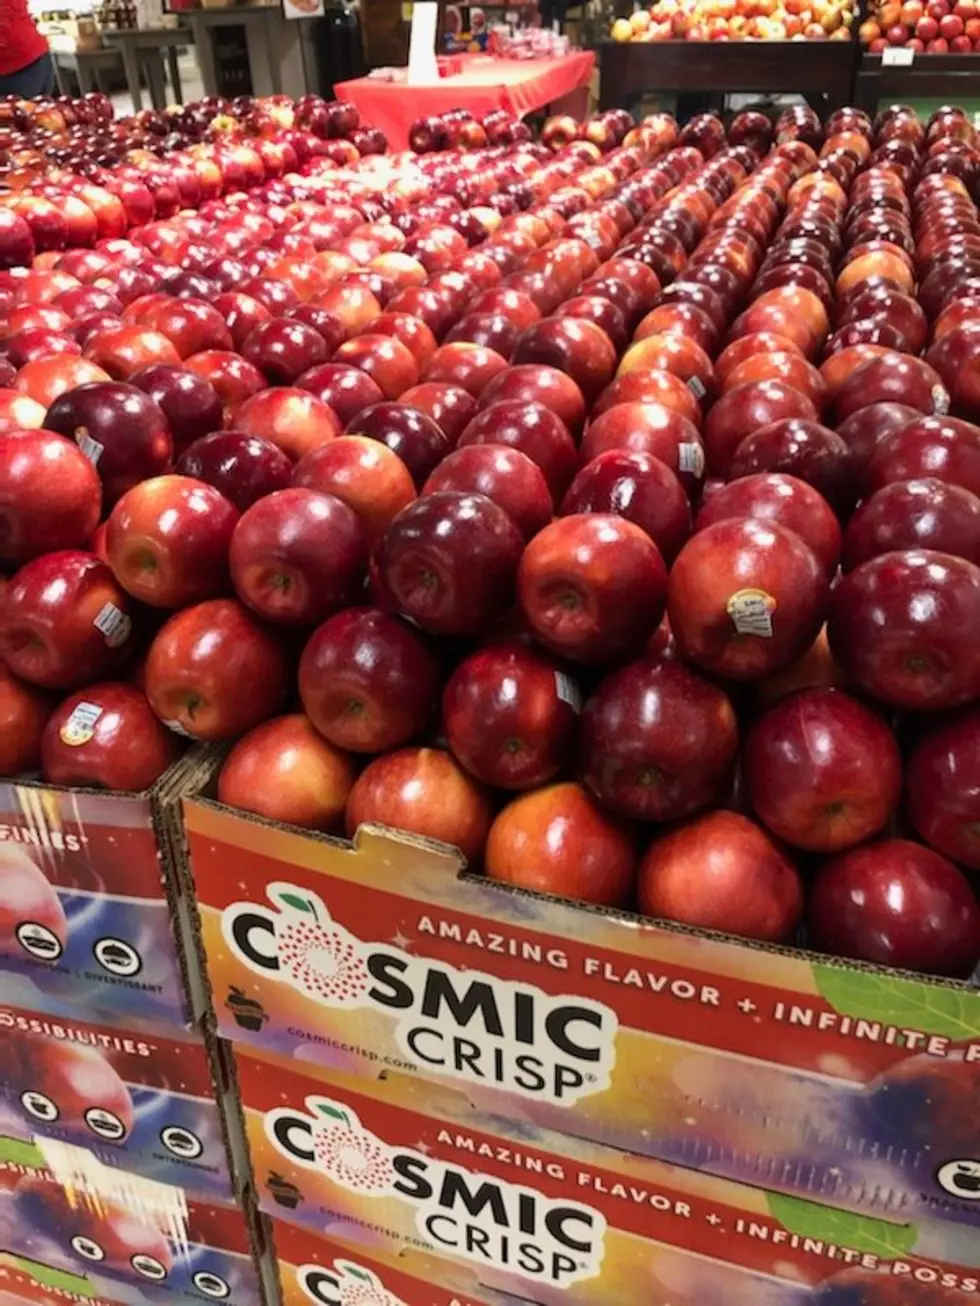 Cosmic Crisp apples make their earliest appearance yet in stores